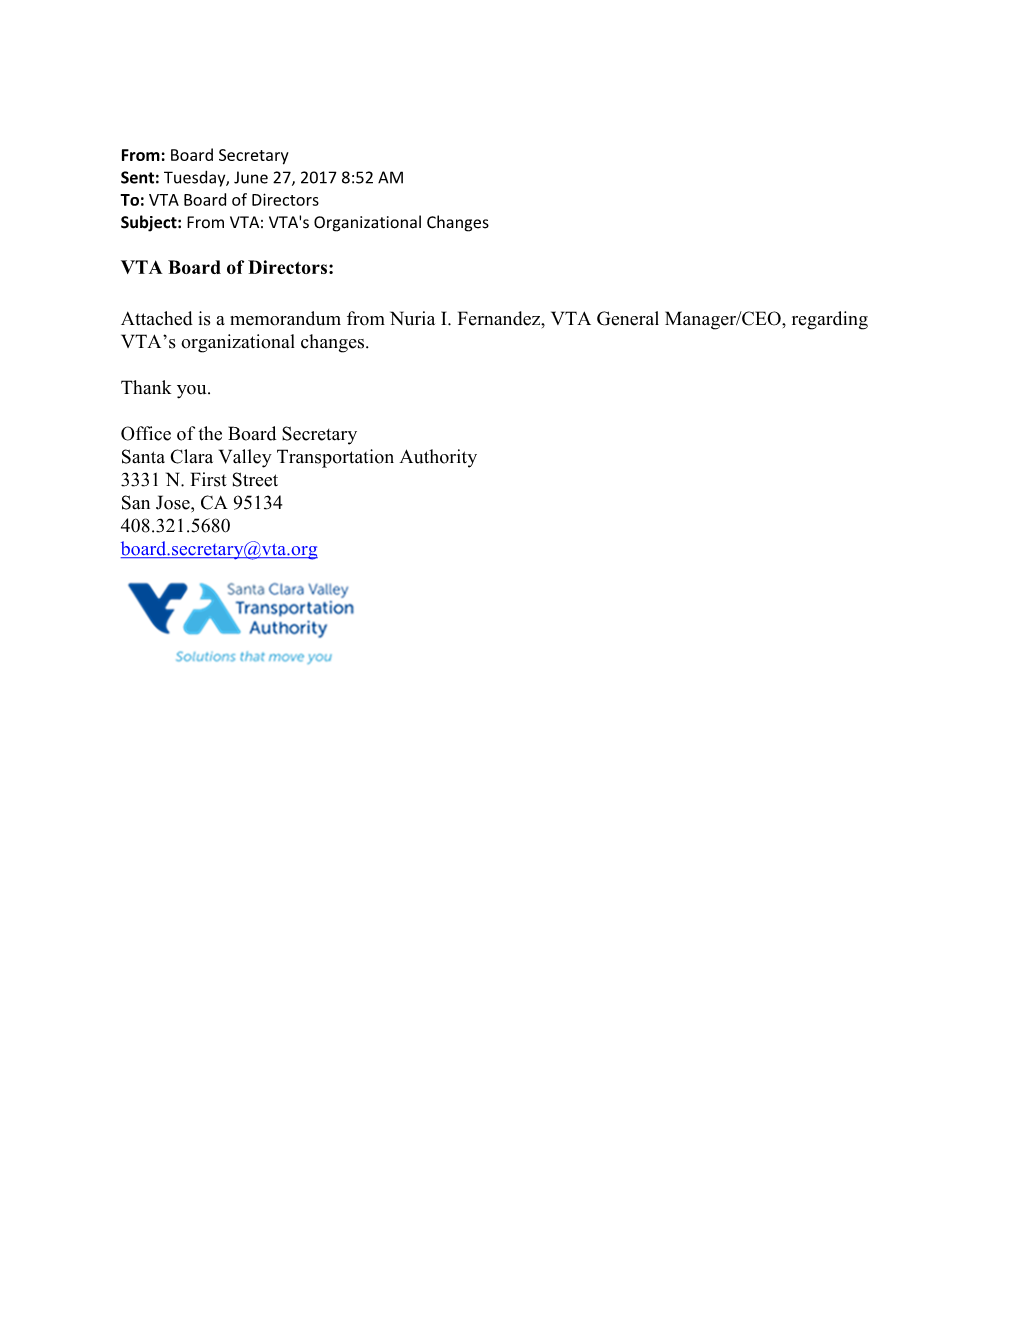 Attached Is a Memorandum from Nuria I. Fernandez, VTA General Manager/CEO, Regarding VTA's Organizatio